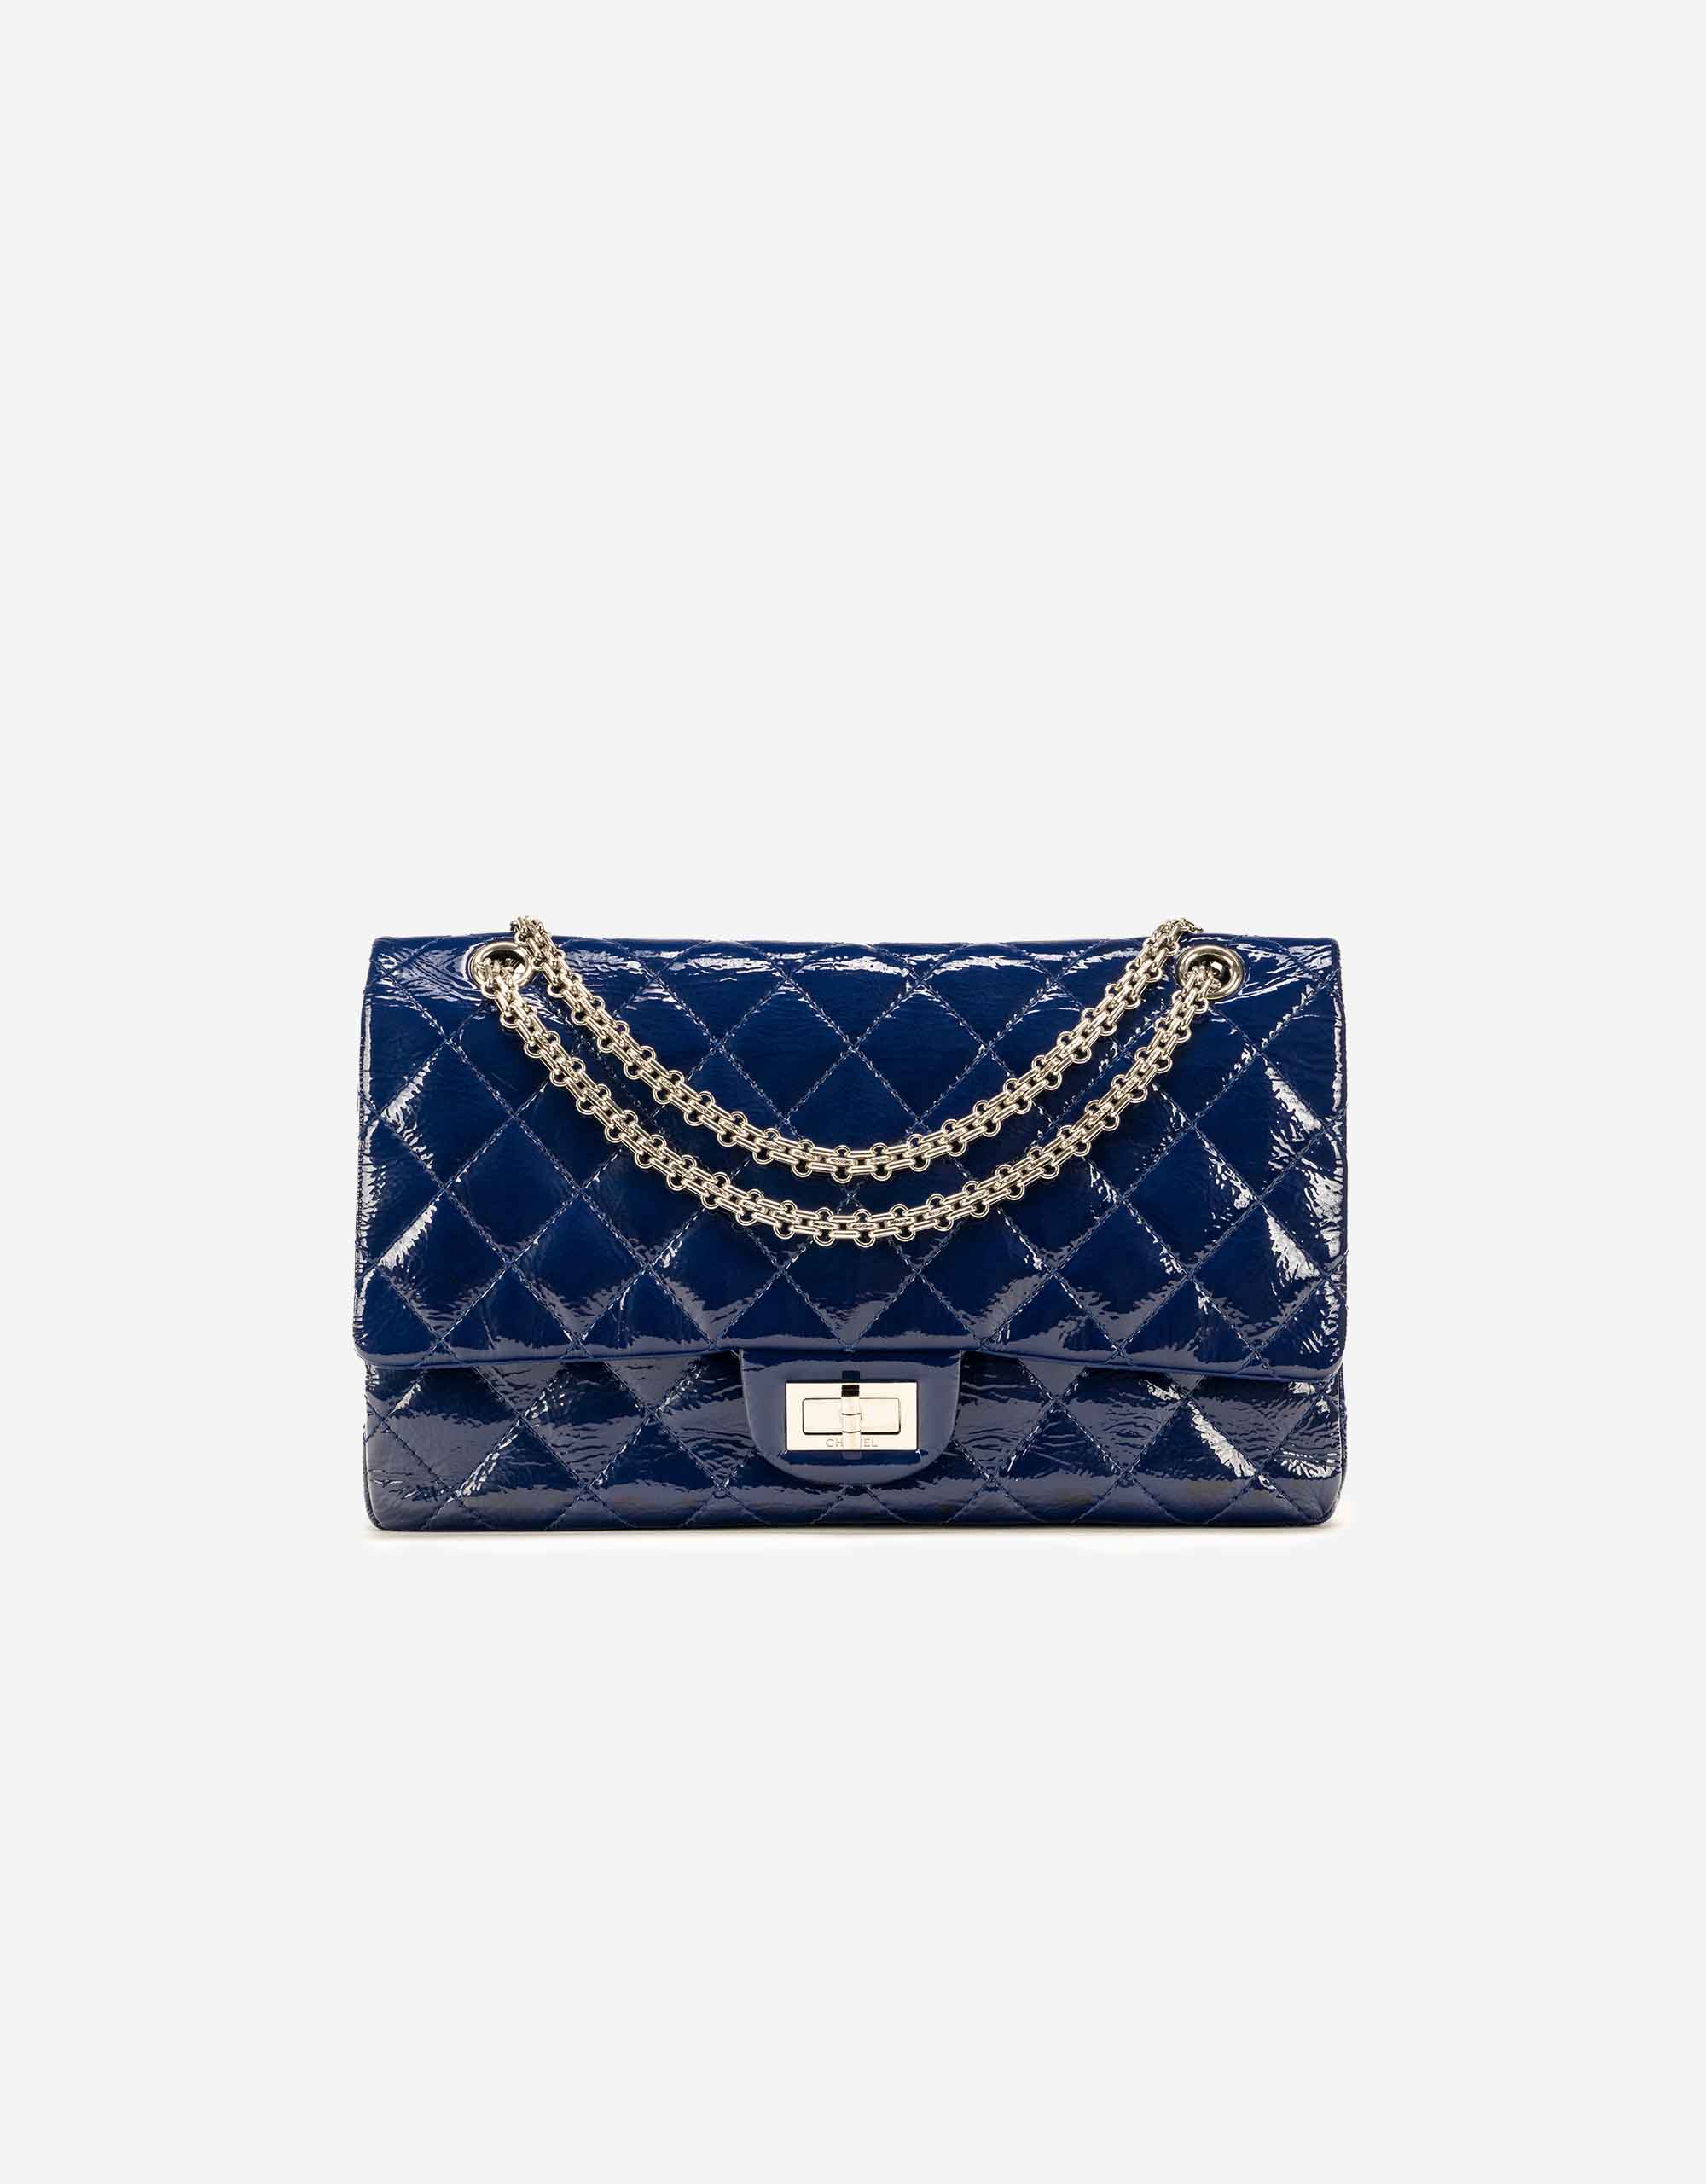 Chanel 2.55 227 Reissue Patent Leather Blue | SACLÀB